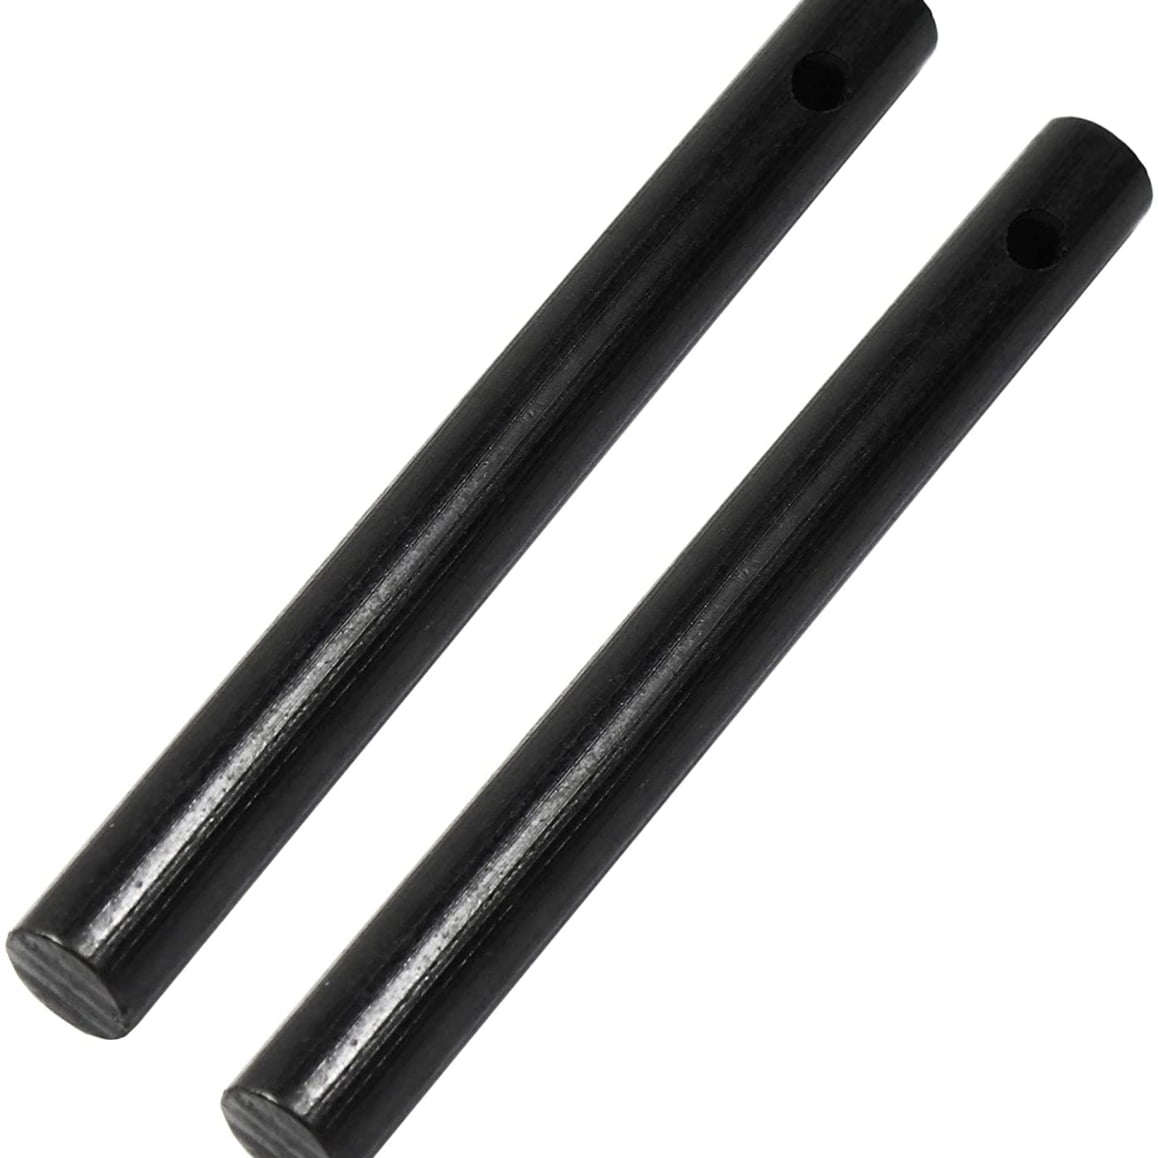 Two bushcraft drilled ferro rods 1/2" x 4" survival ferrocerium  firesteel rods 